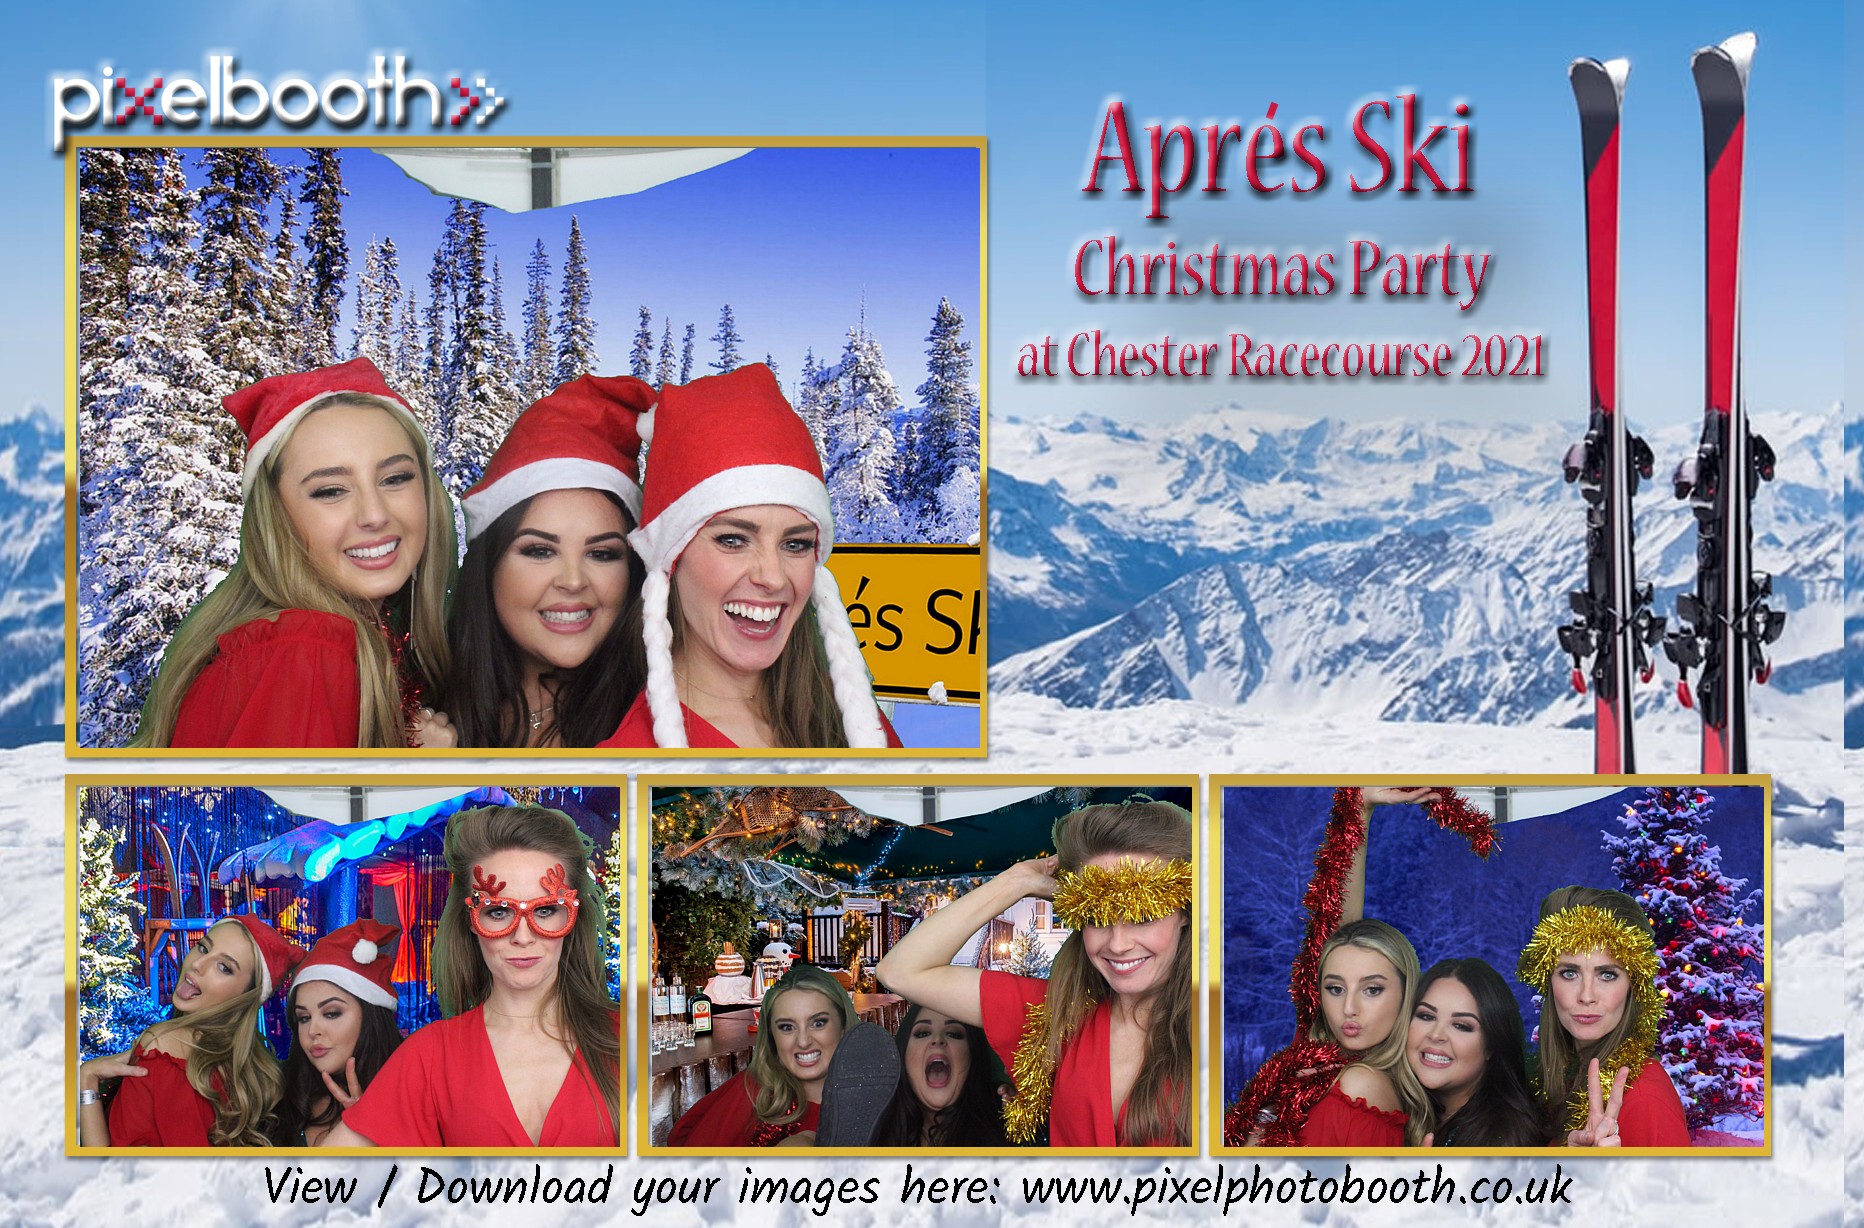 27th Nov 2021: Apres Ski Christmas Party at Chester Racecourse